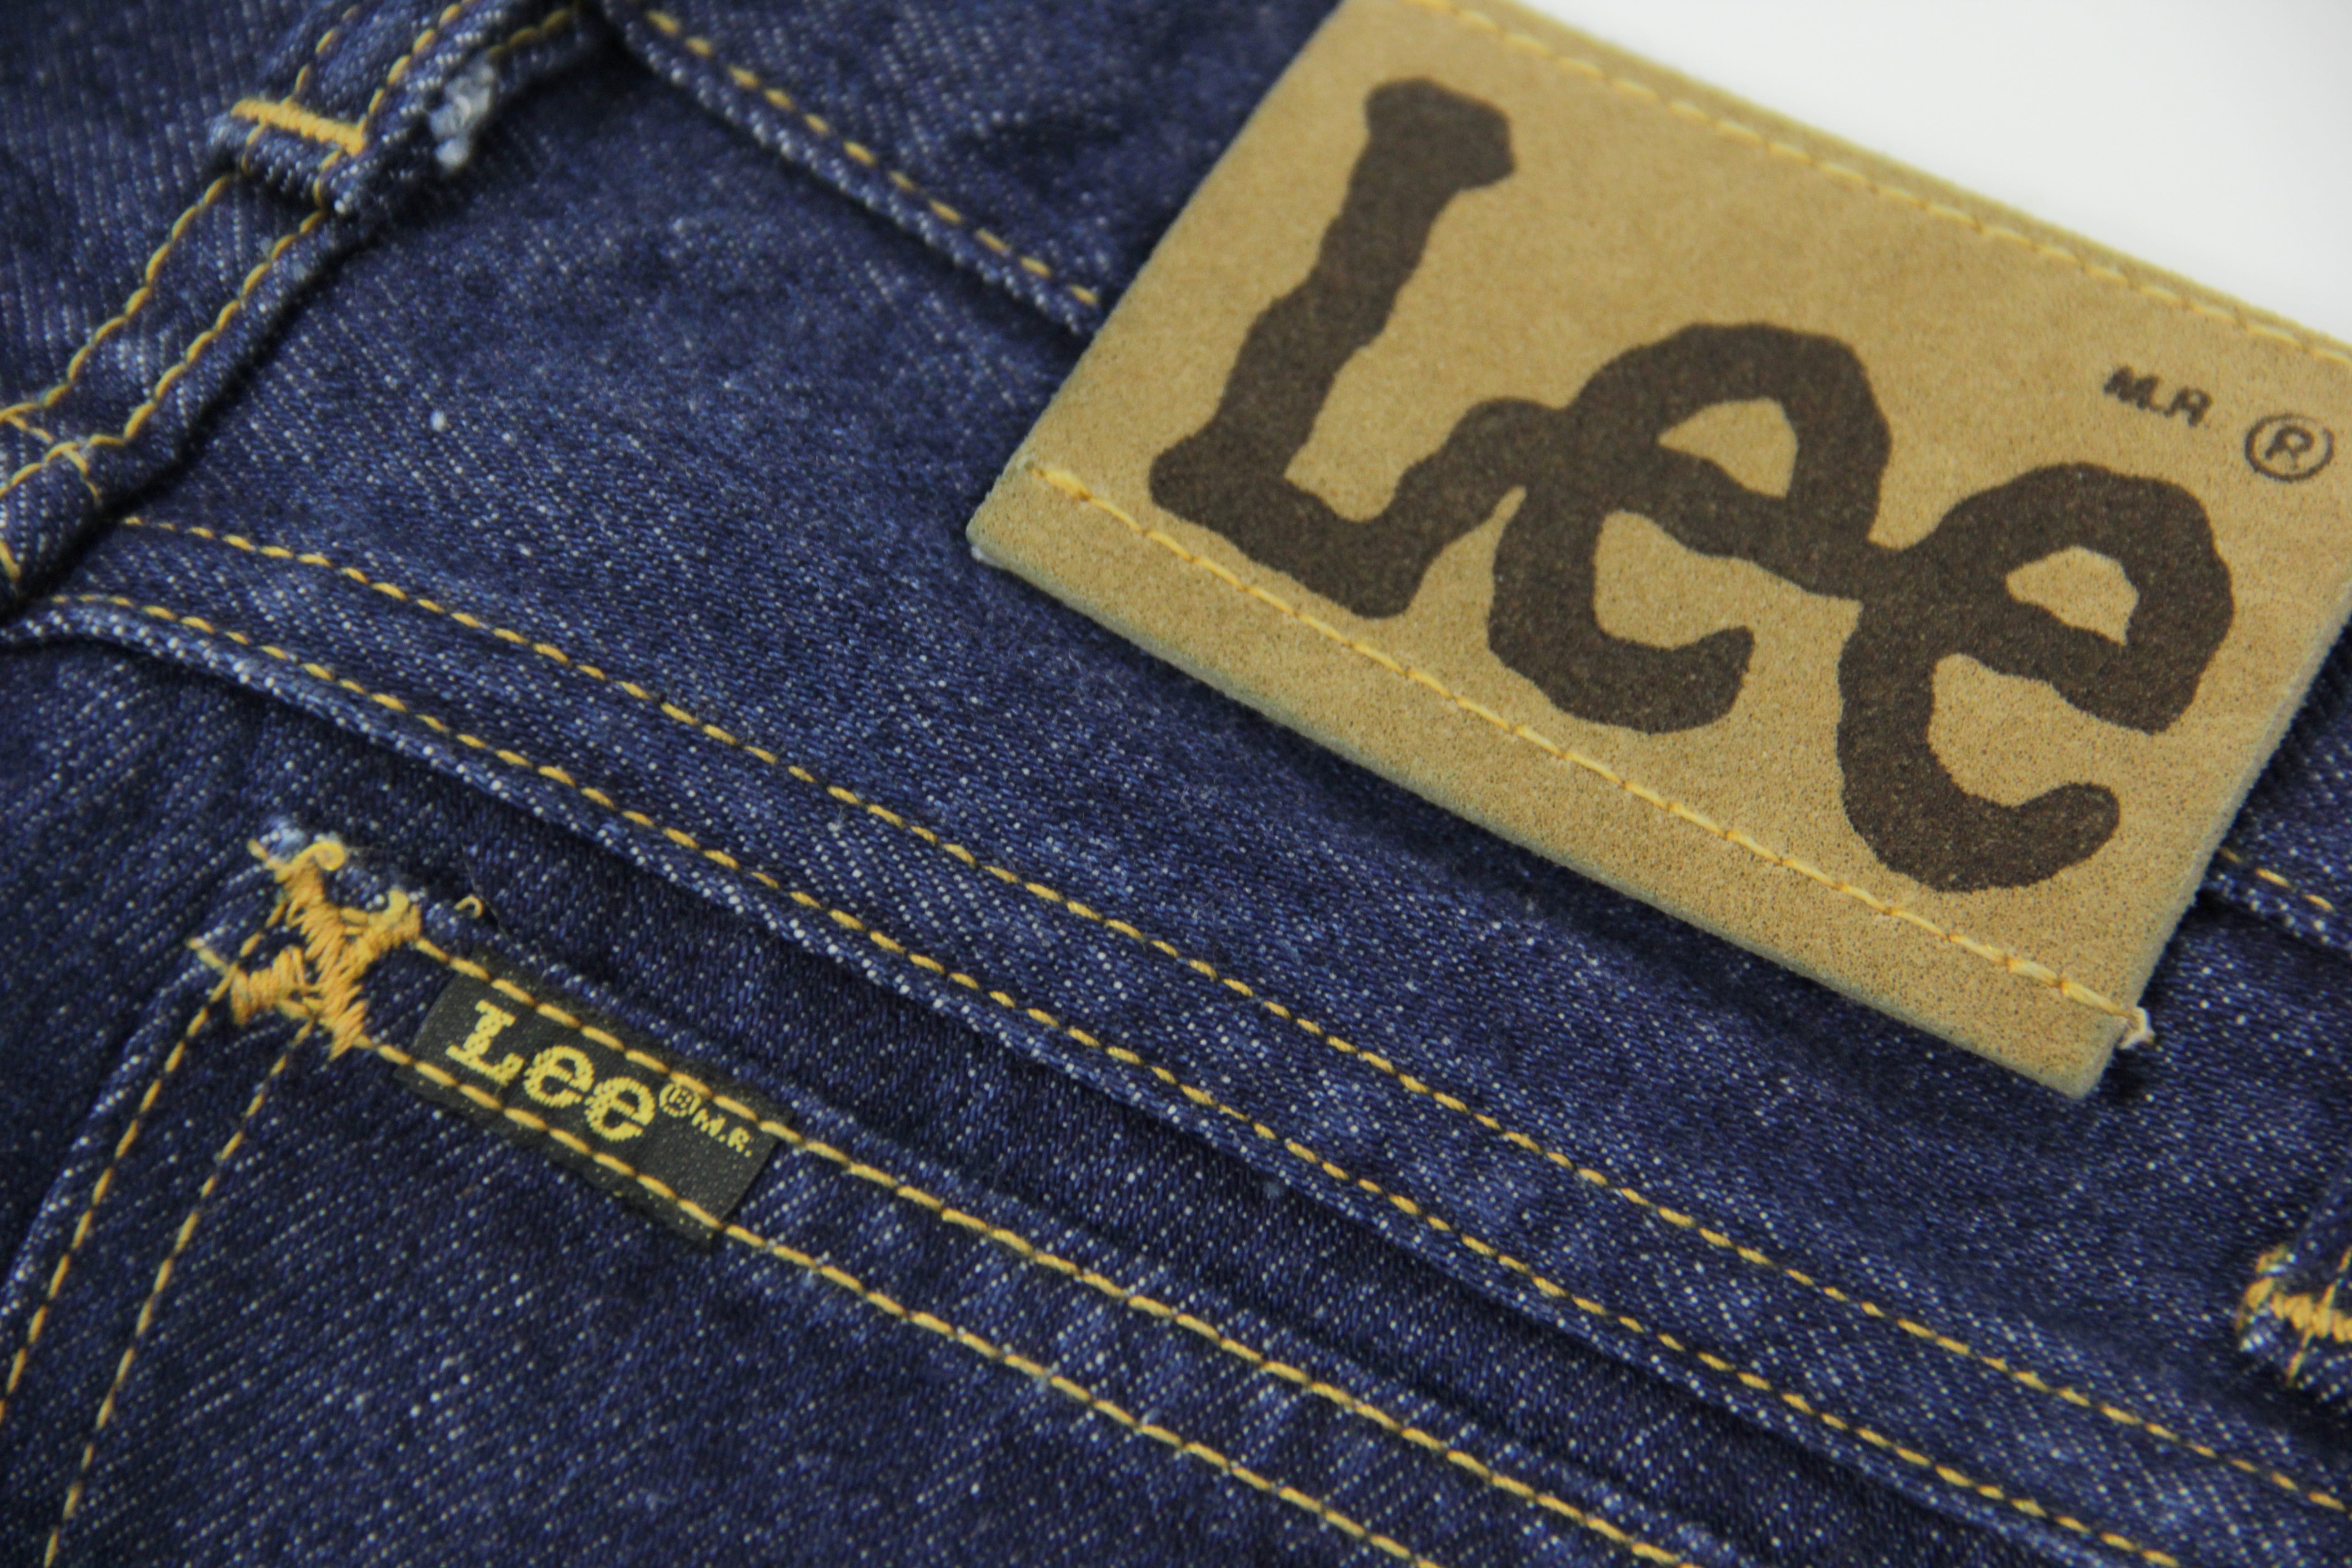 LEE Woman's Vintage Straight Long Leg Jeans SIZE W26/L35